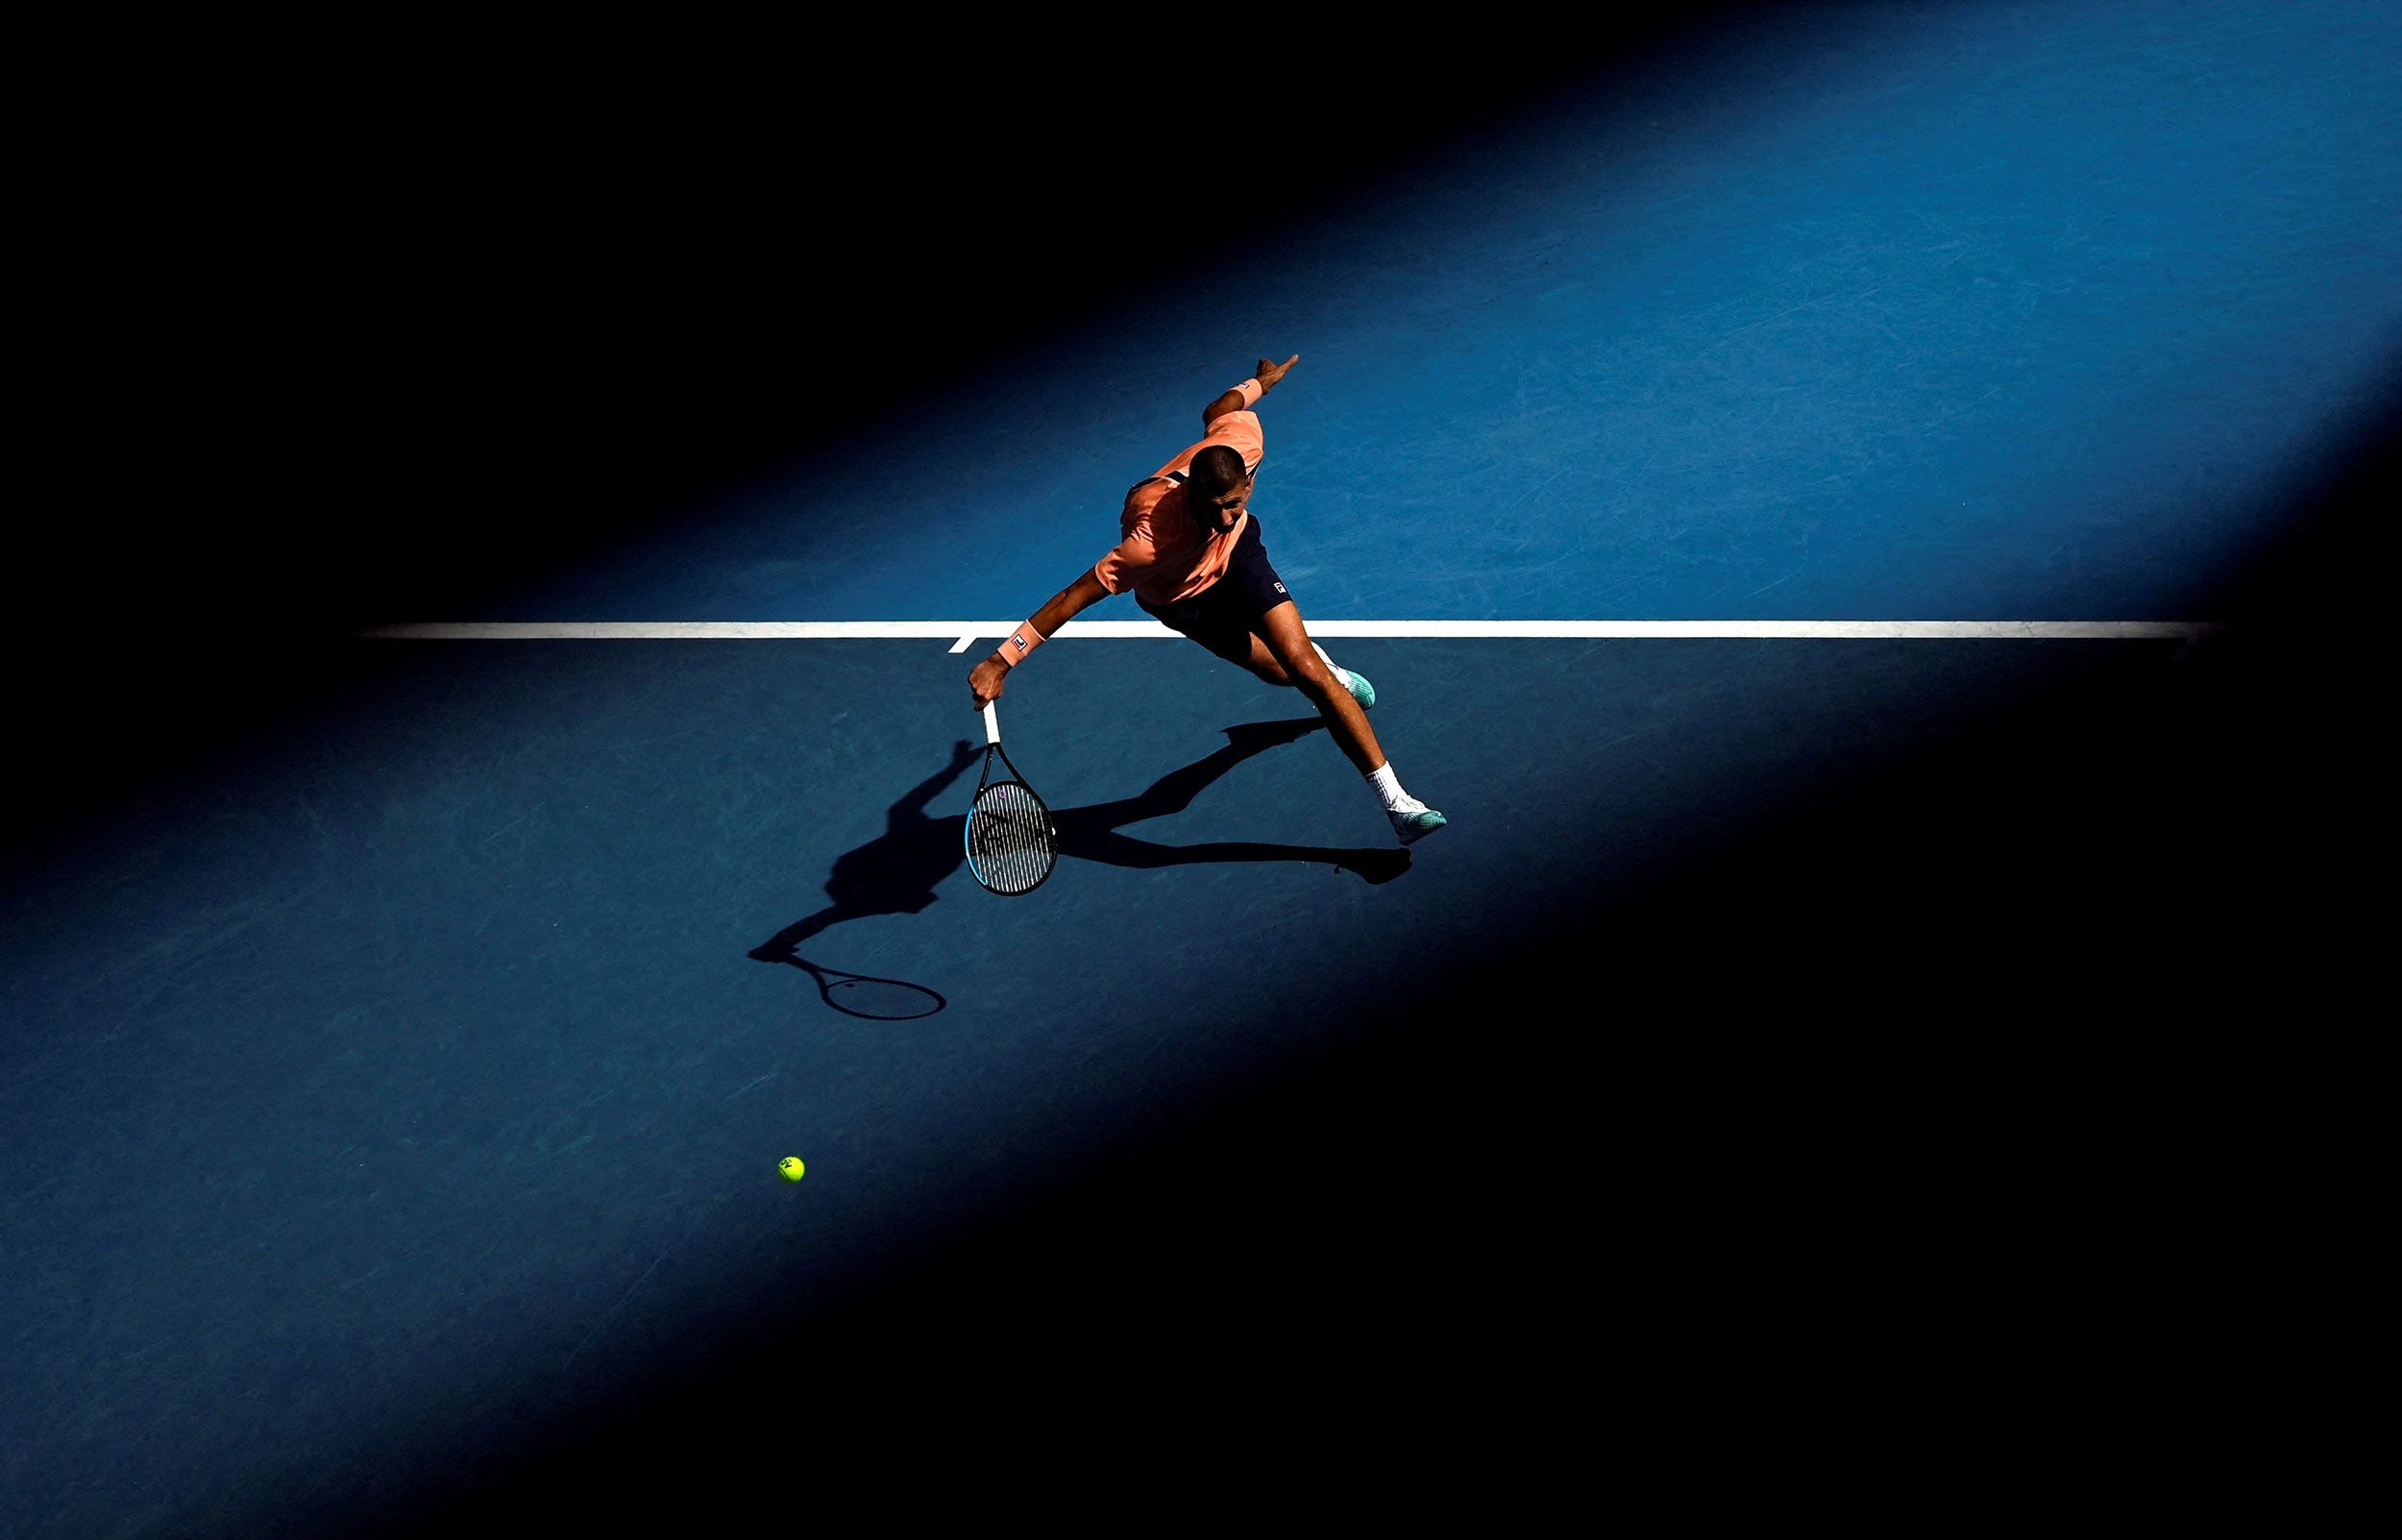 How players from Netflix's tennis documentary 'Break Point' fared at  Australian Open 2023, ft. Nick Kyrgios, Paula Badosa, Matteo Berrettini